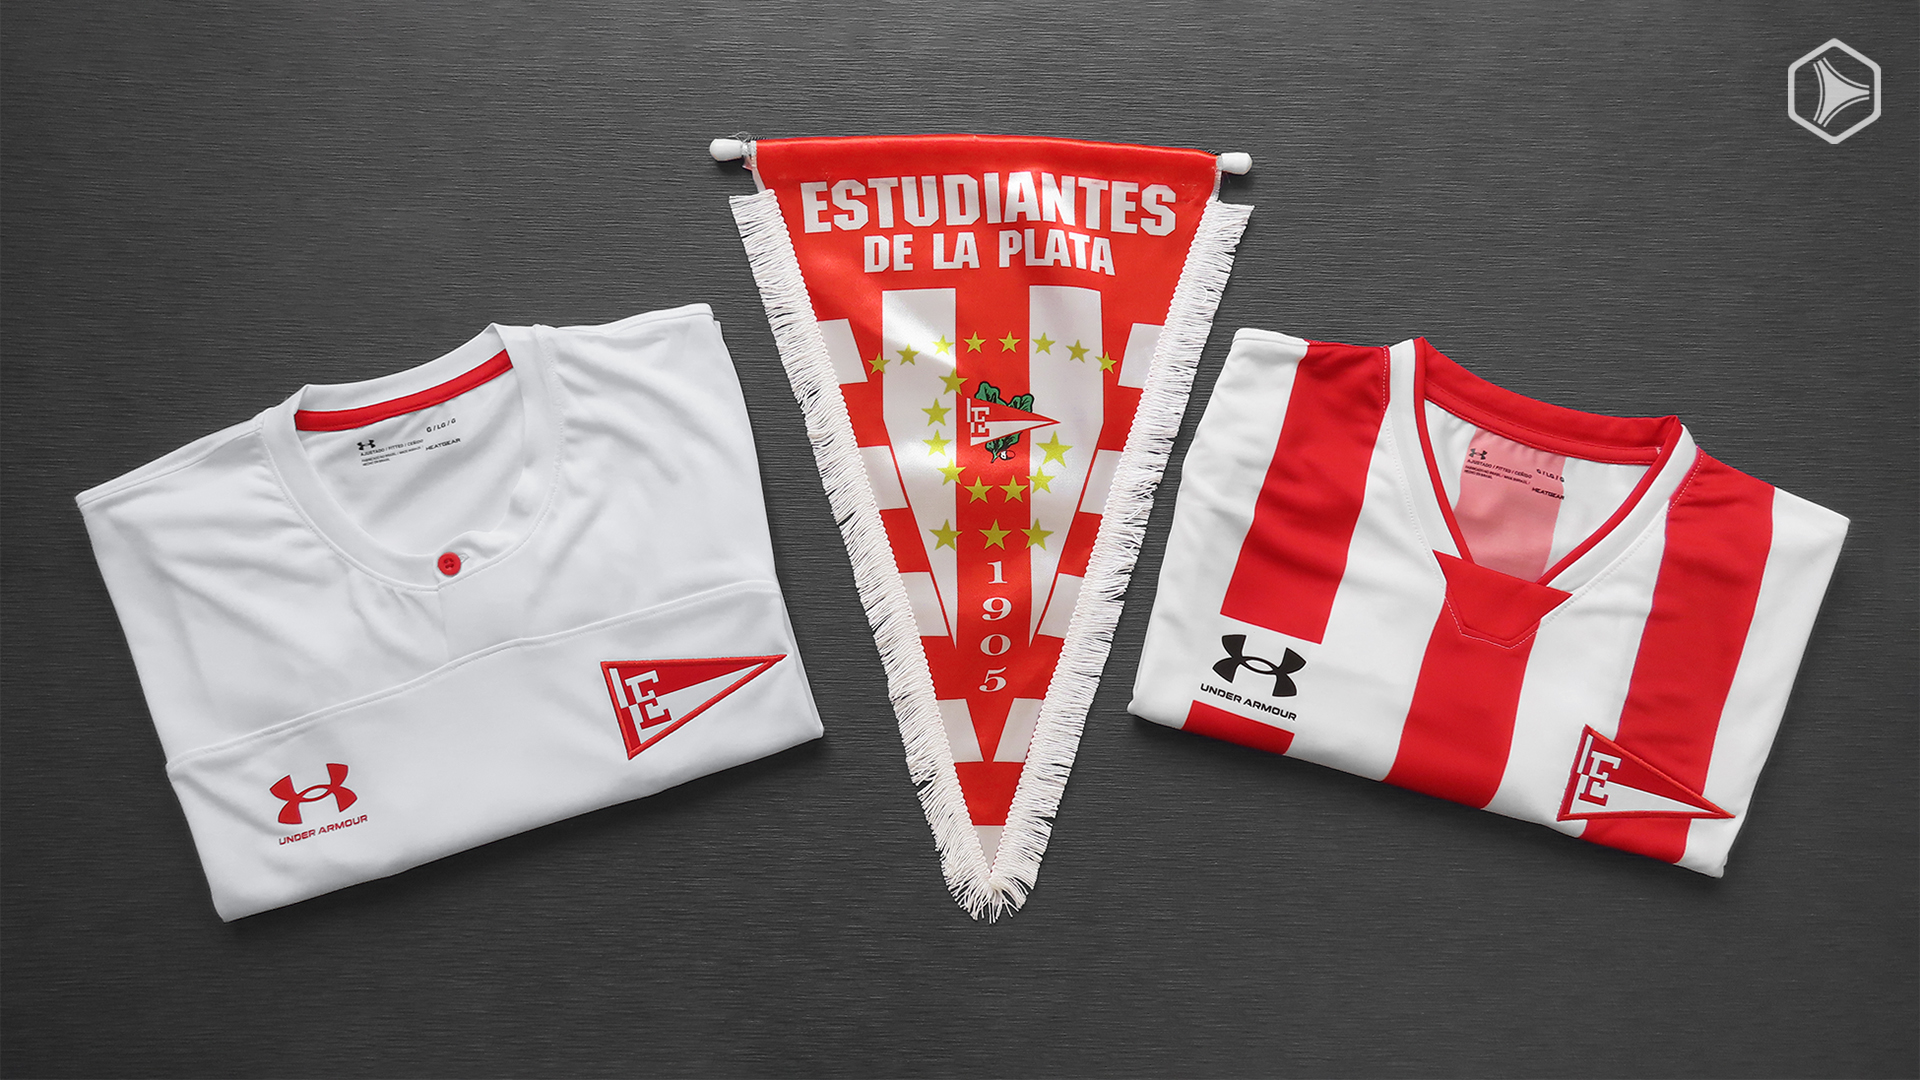 Review Camisetas Under Armour De Estudiantes De La Plata 2021 Mdg